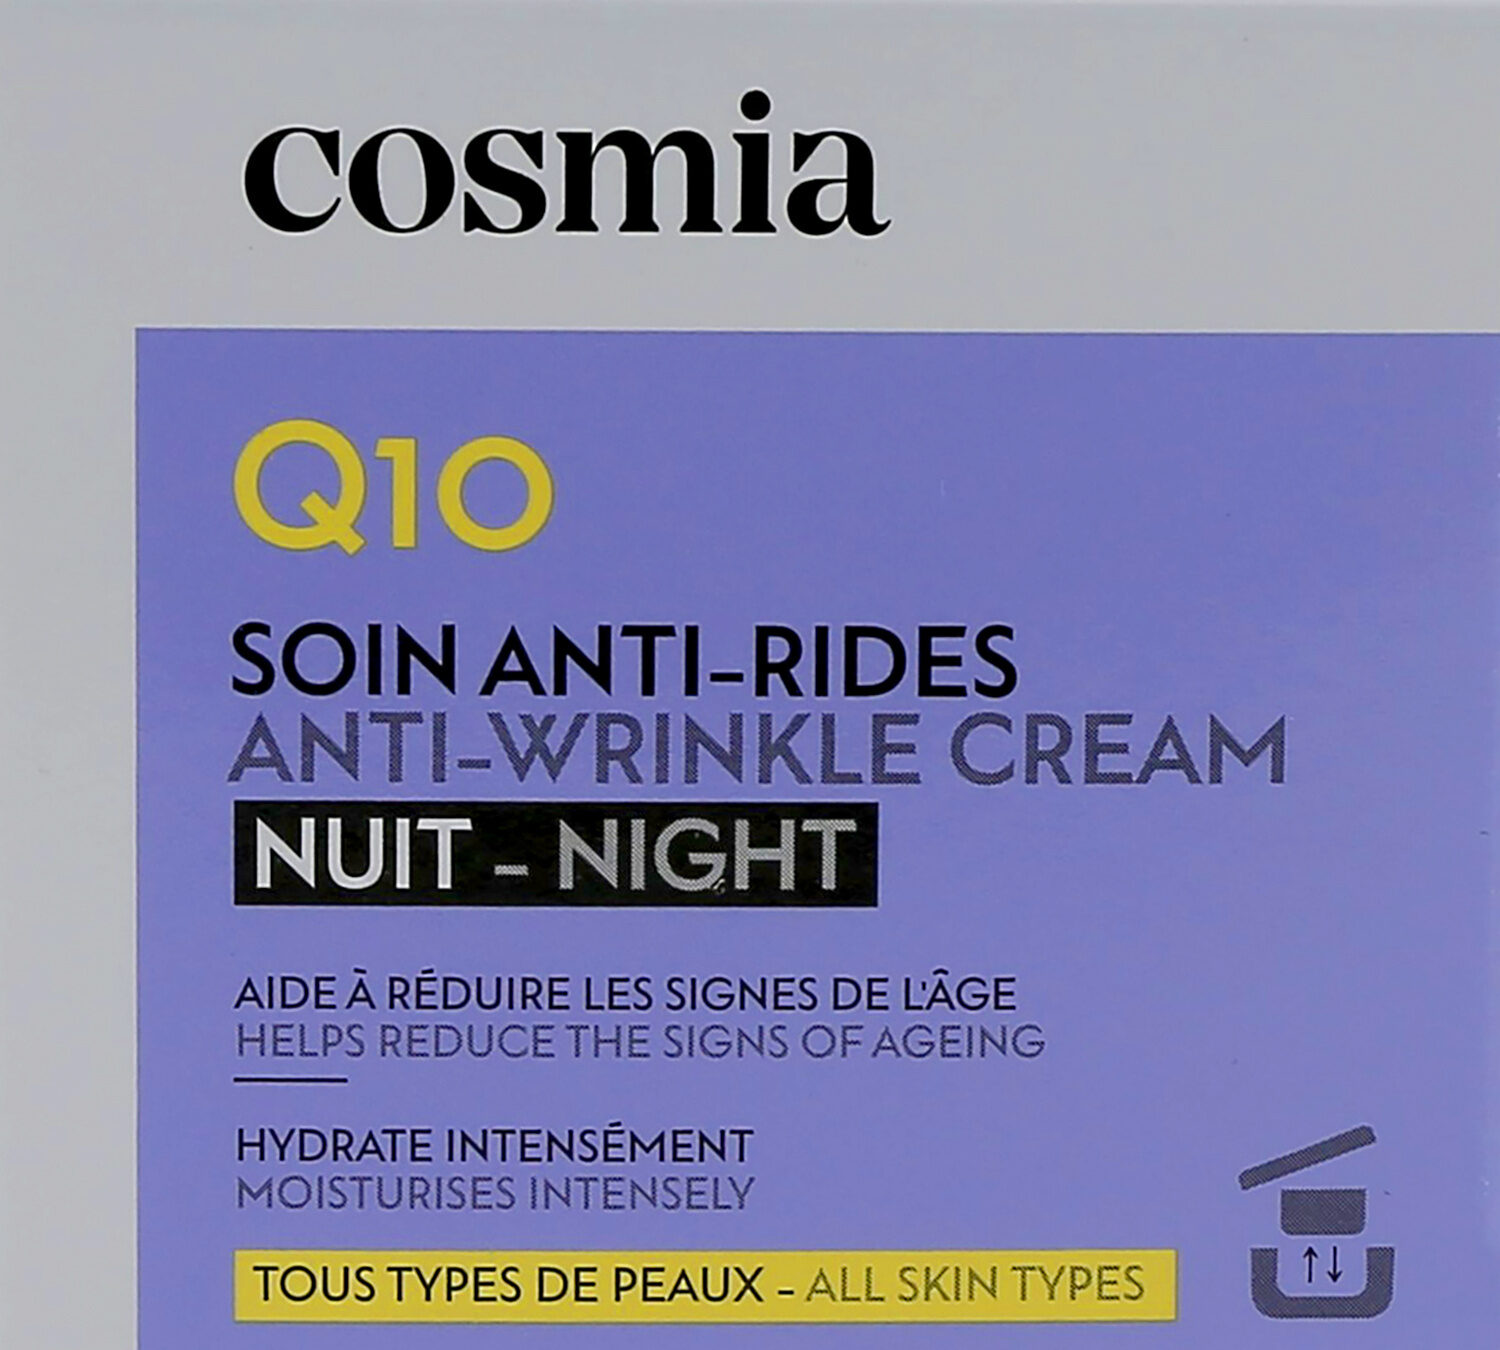 Cosmia creme nuit - anti ride - q10 50ml - 製品 - fr